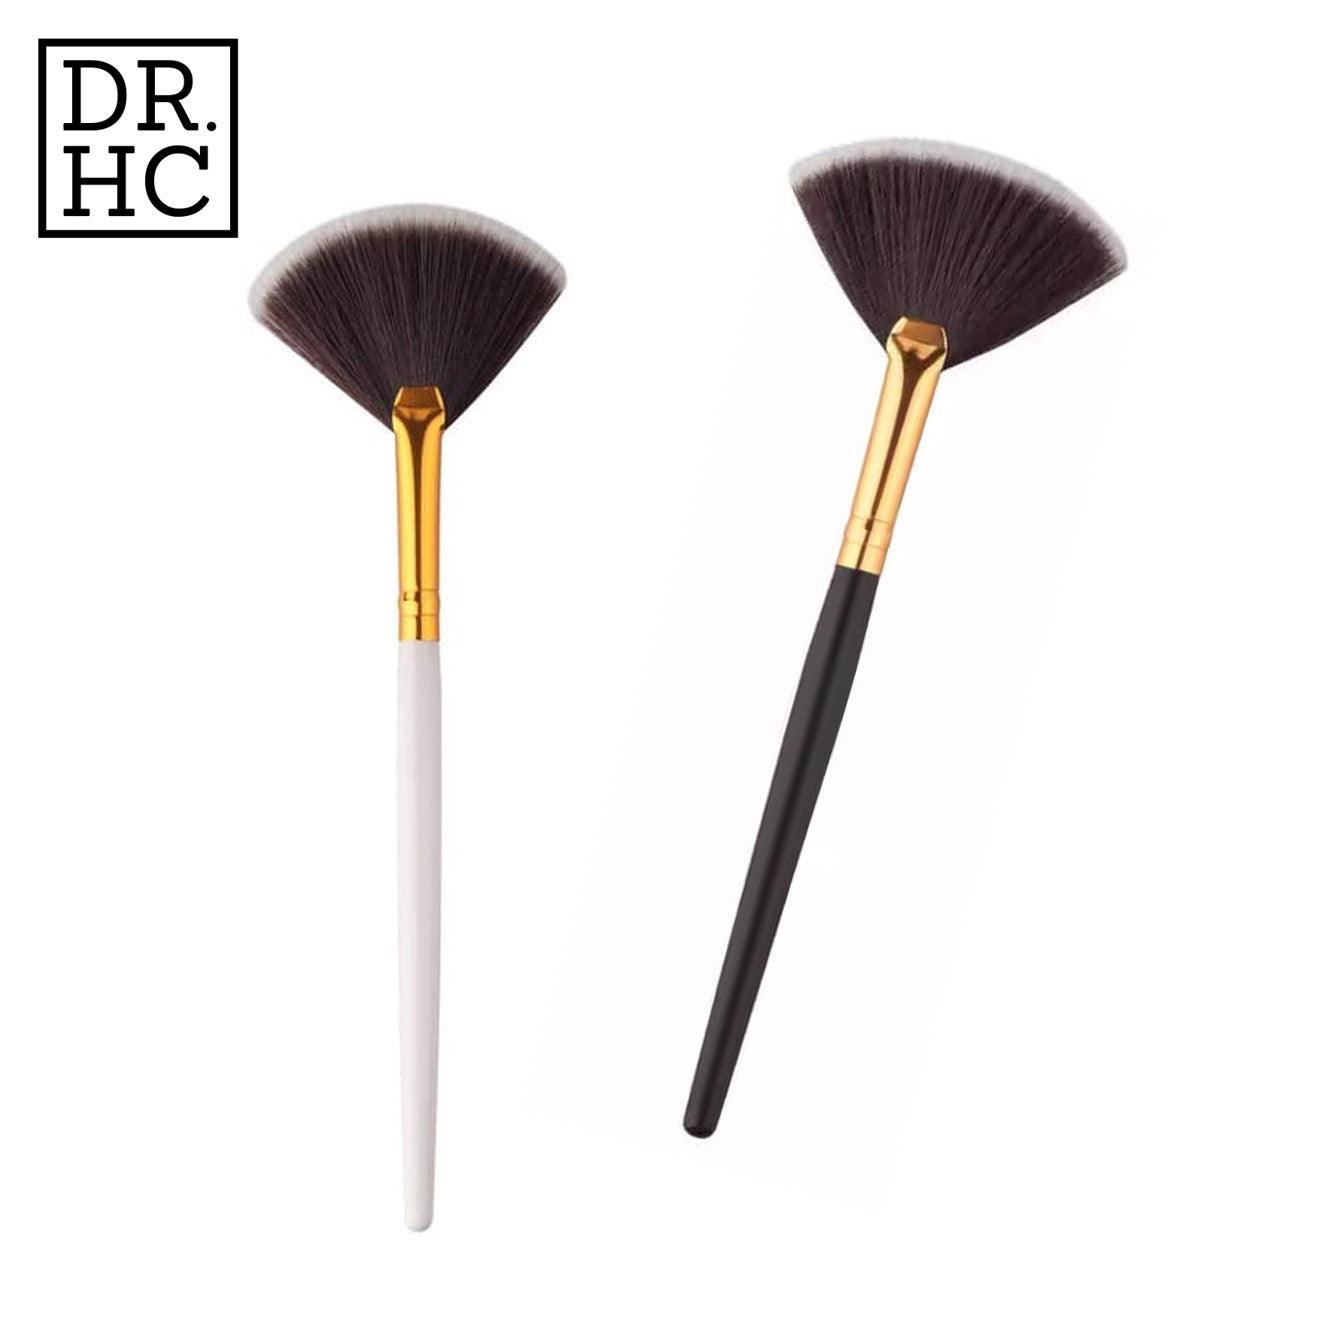 DR.HC Mask Brush - Soft Type (for Masque, Skin peeling...)